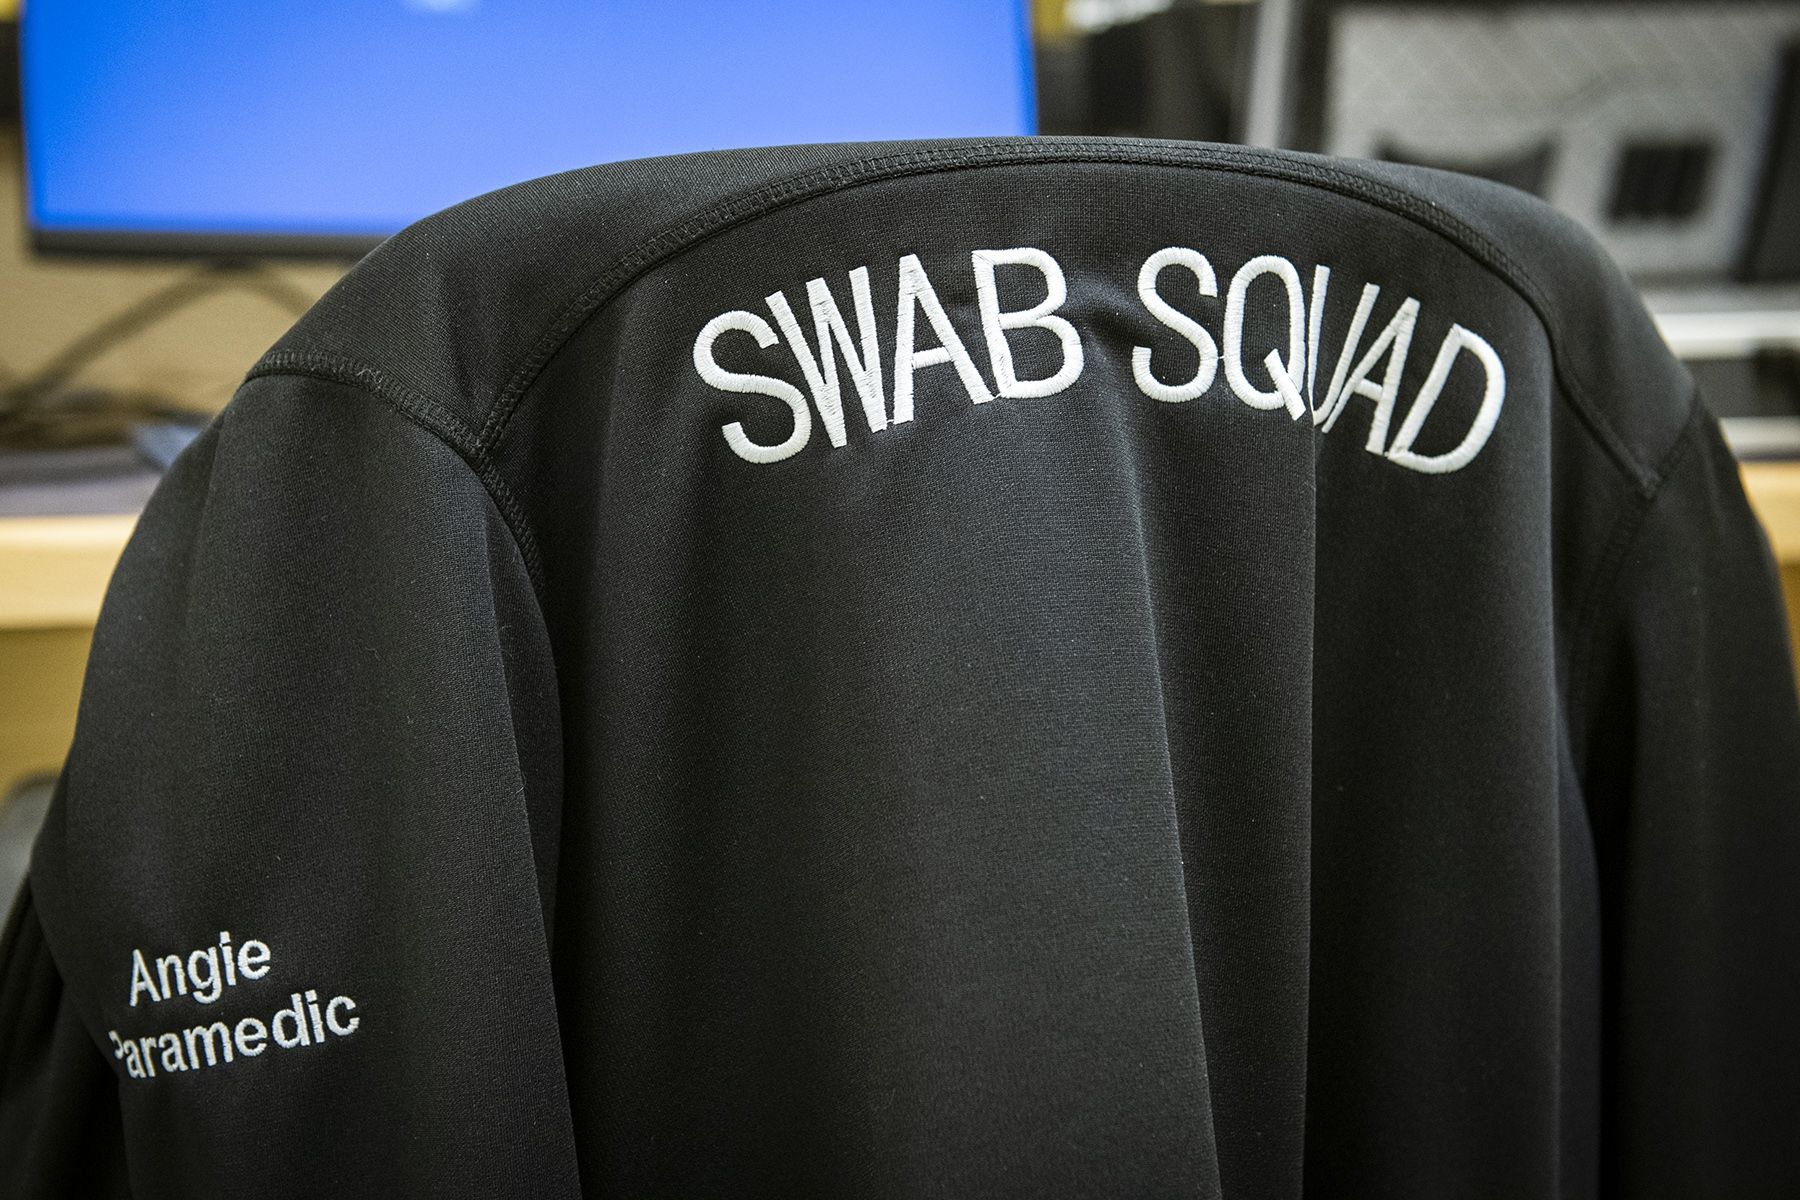 The swab squad